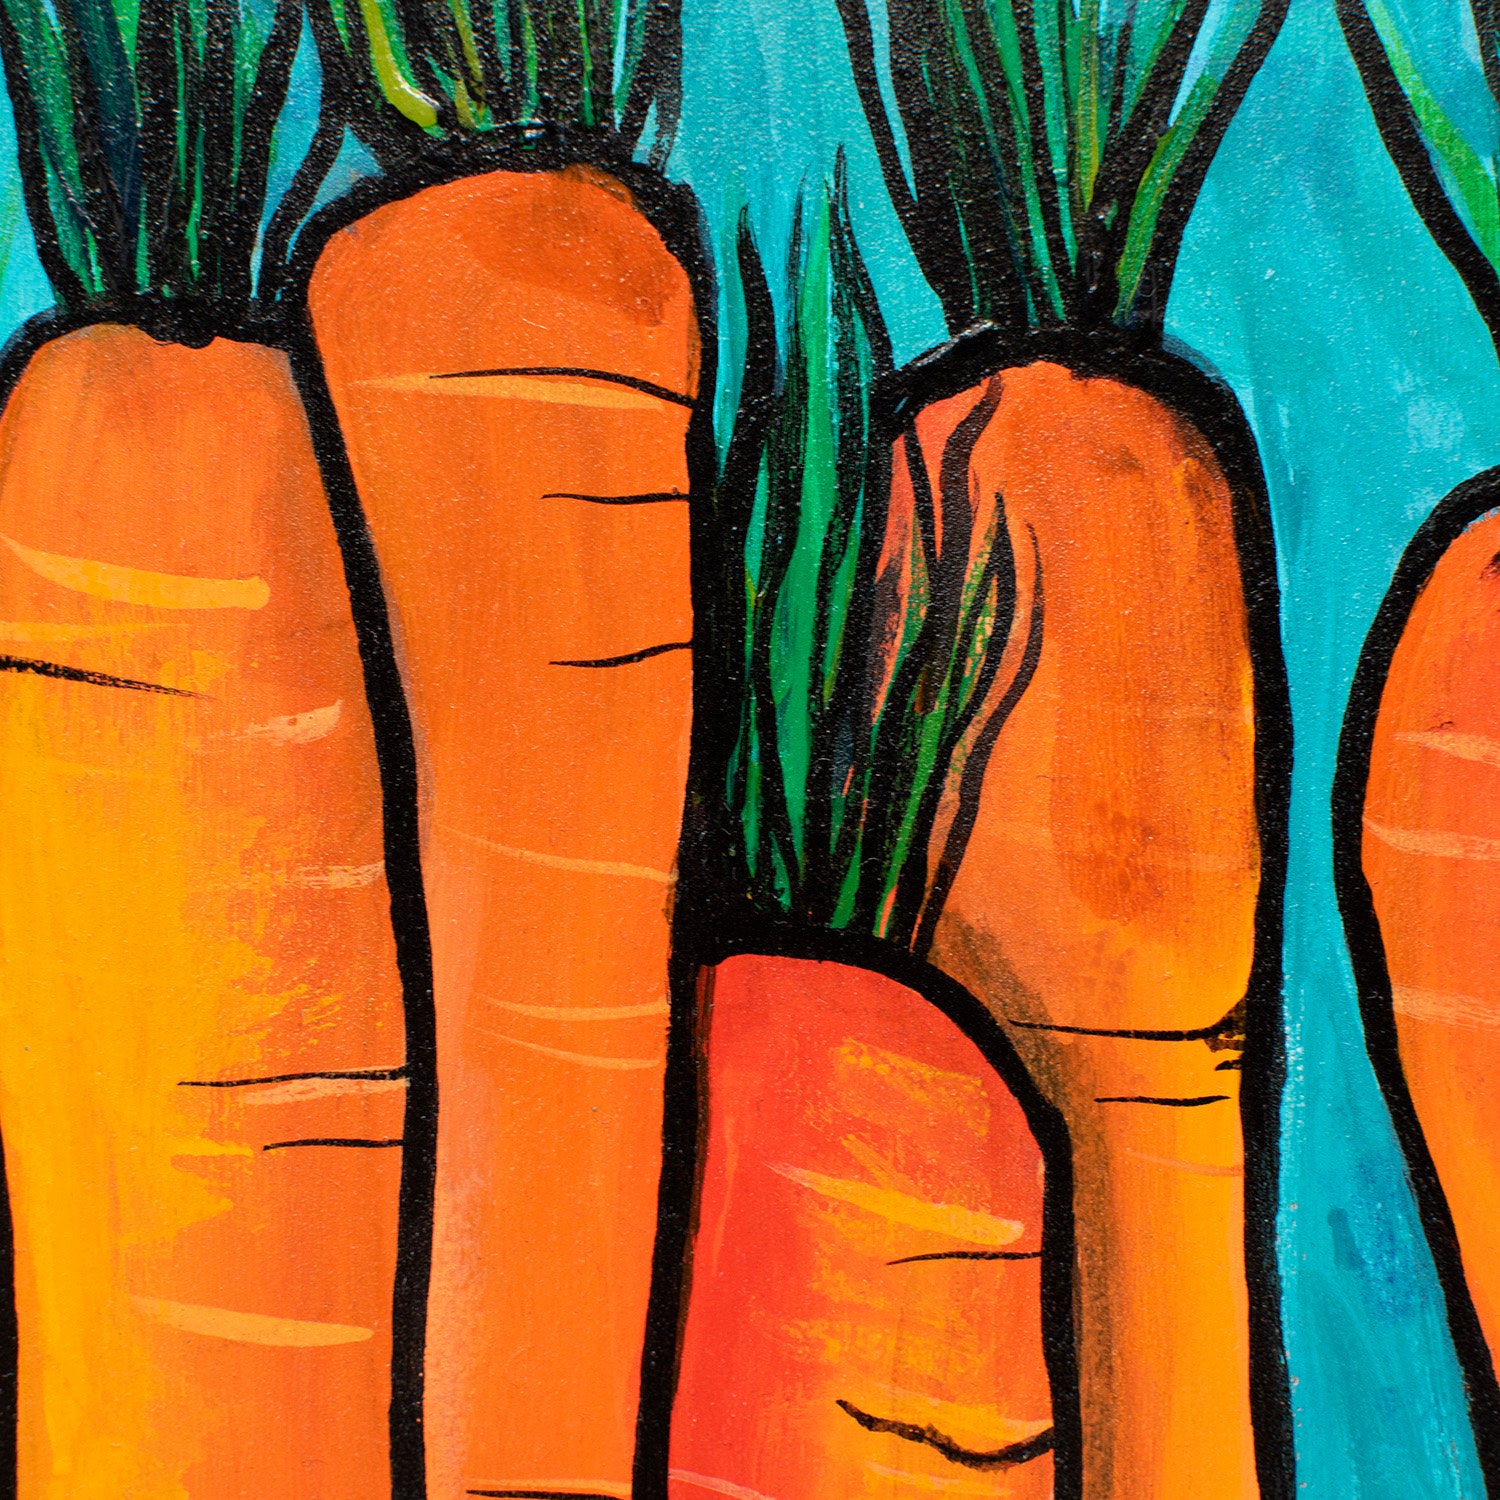 Original Carrot Painting - Vegetable Art for Living, Dining Room, Kitchen 